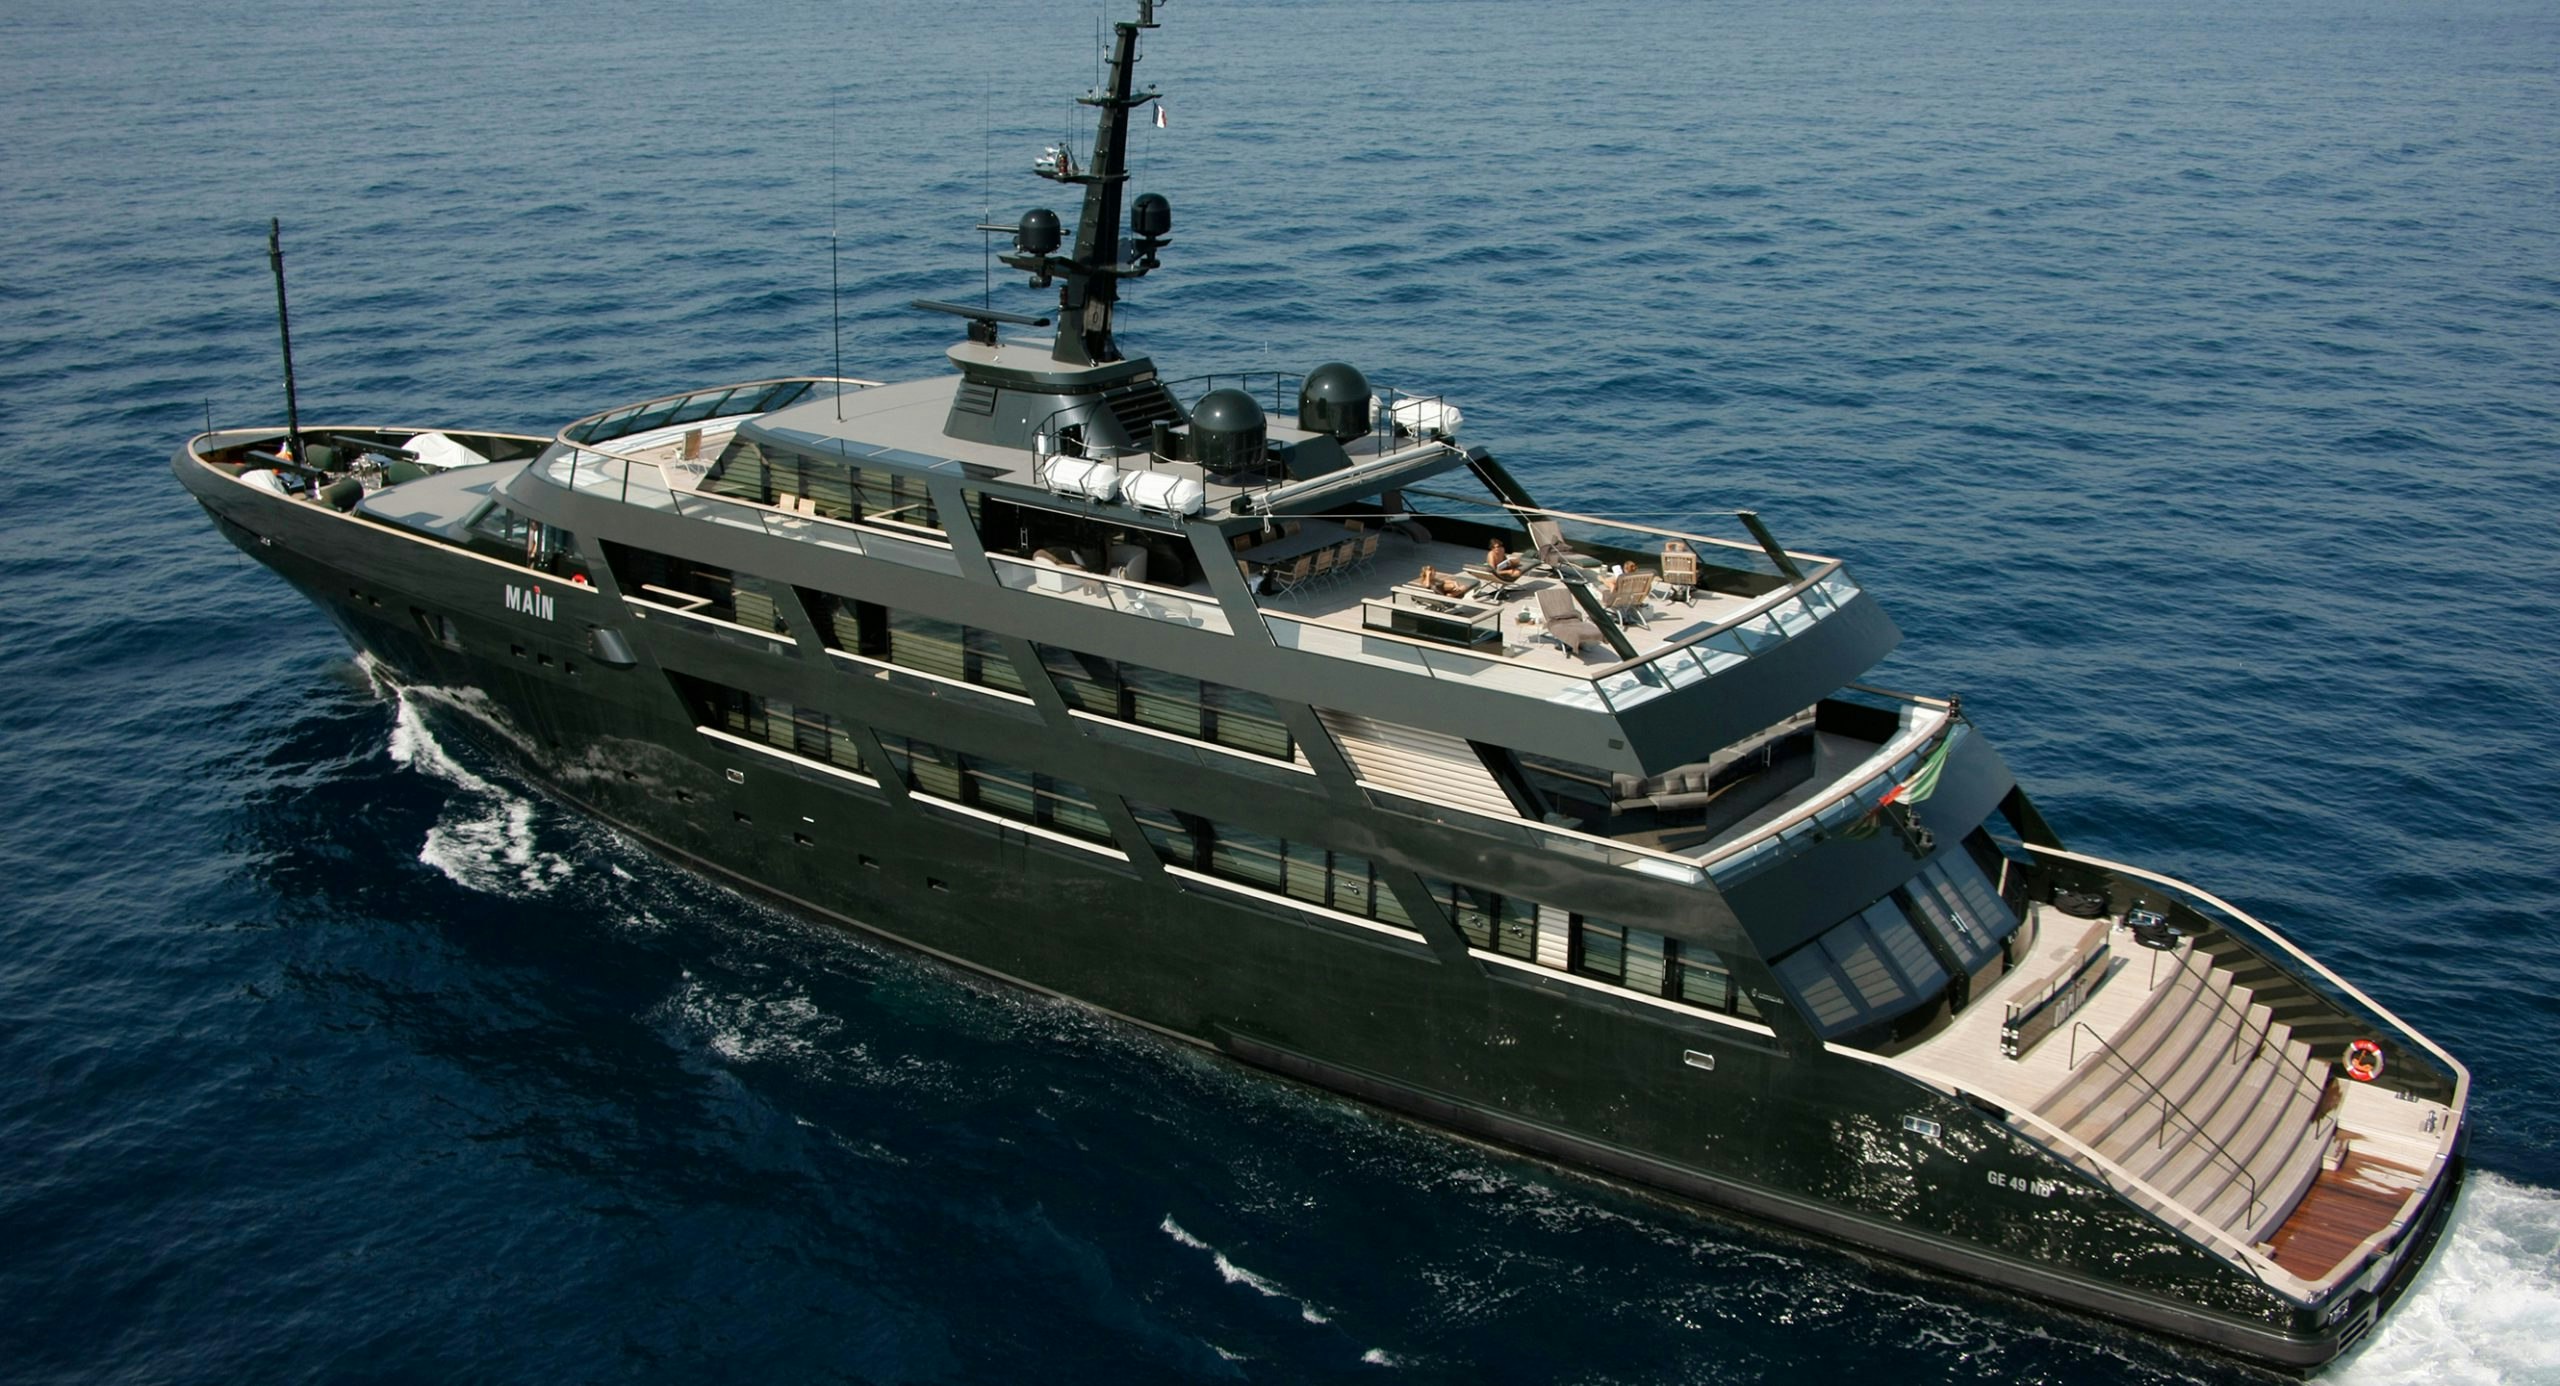 Superyacht Codecasa Main de designerul Giorgio Armani